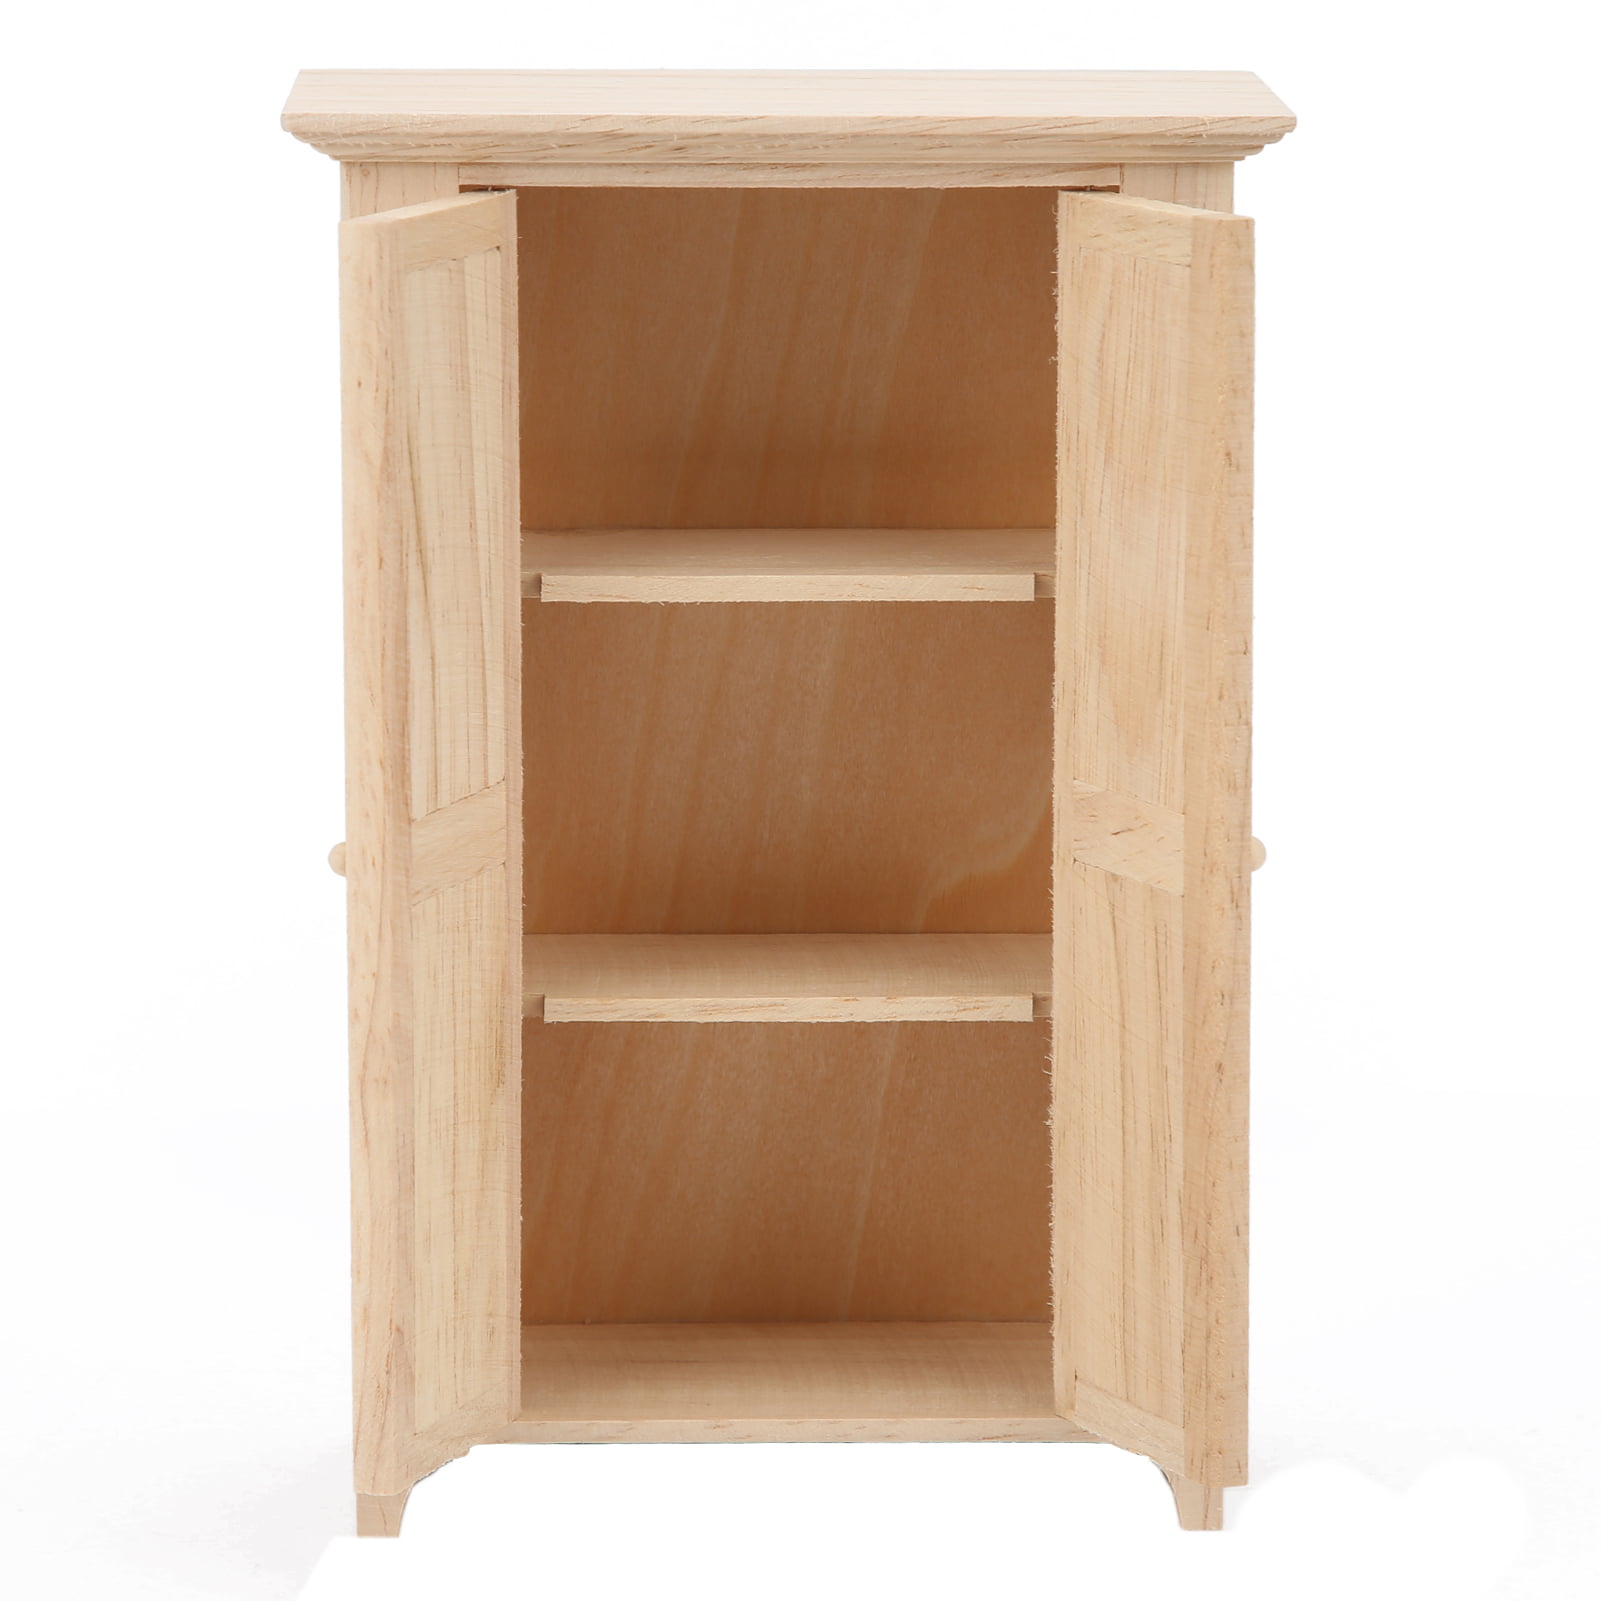 1:12 Doll House Miniature Wood Wall Shelf Model Furniture Acces.OU